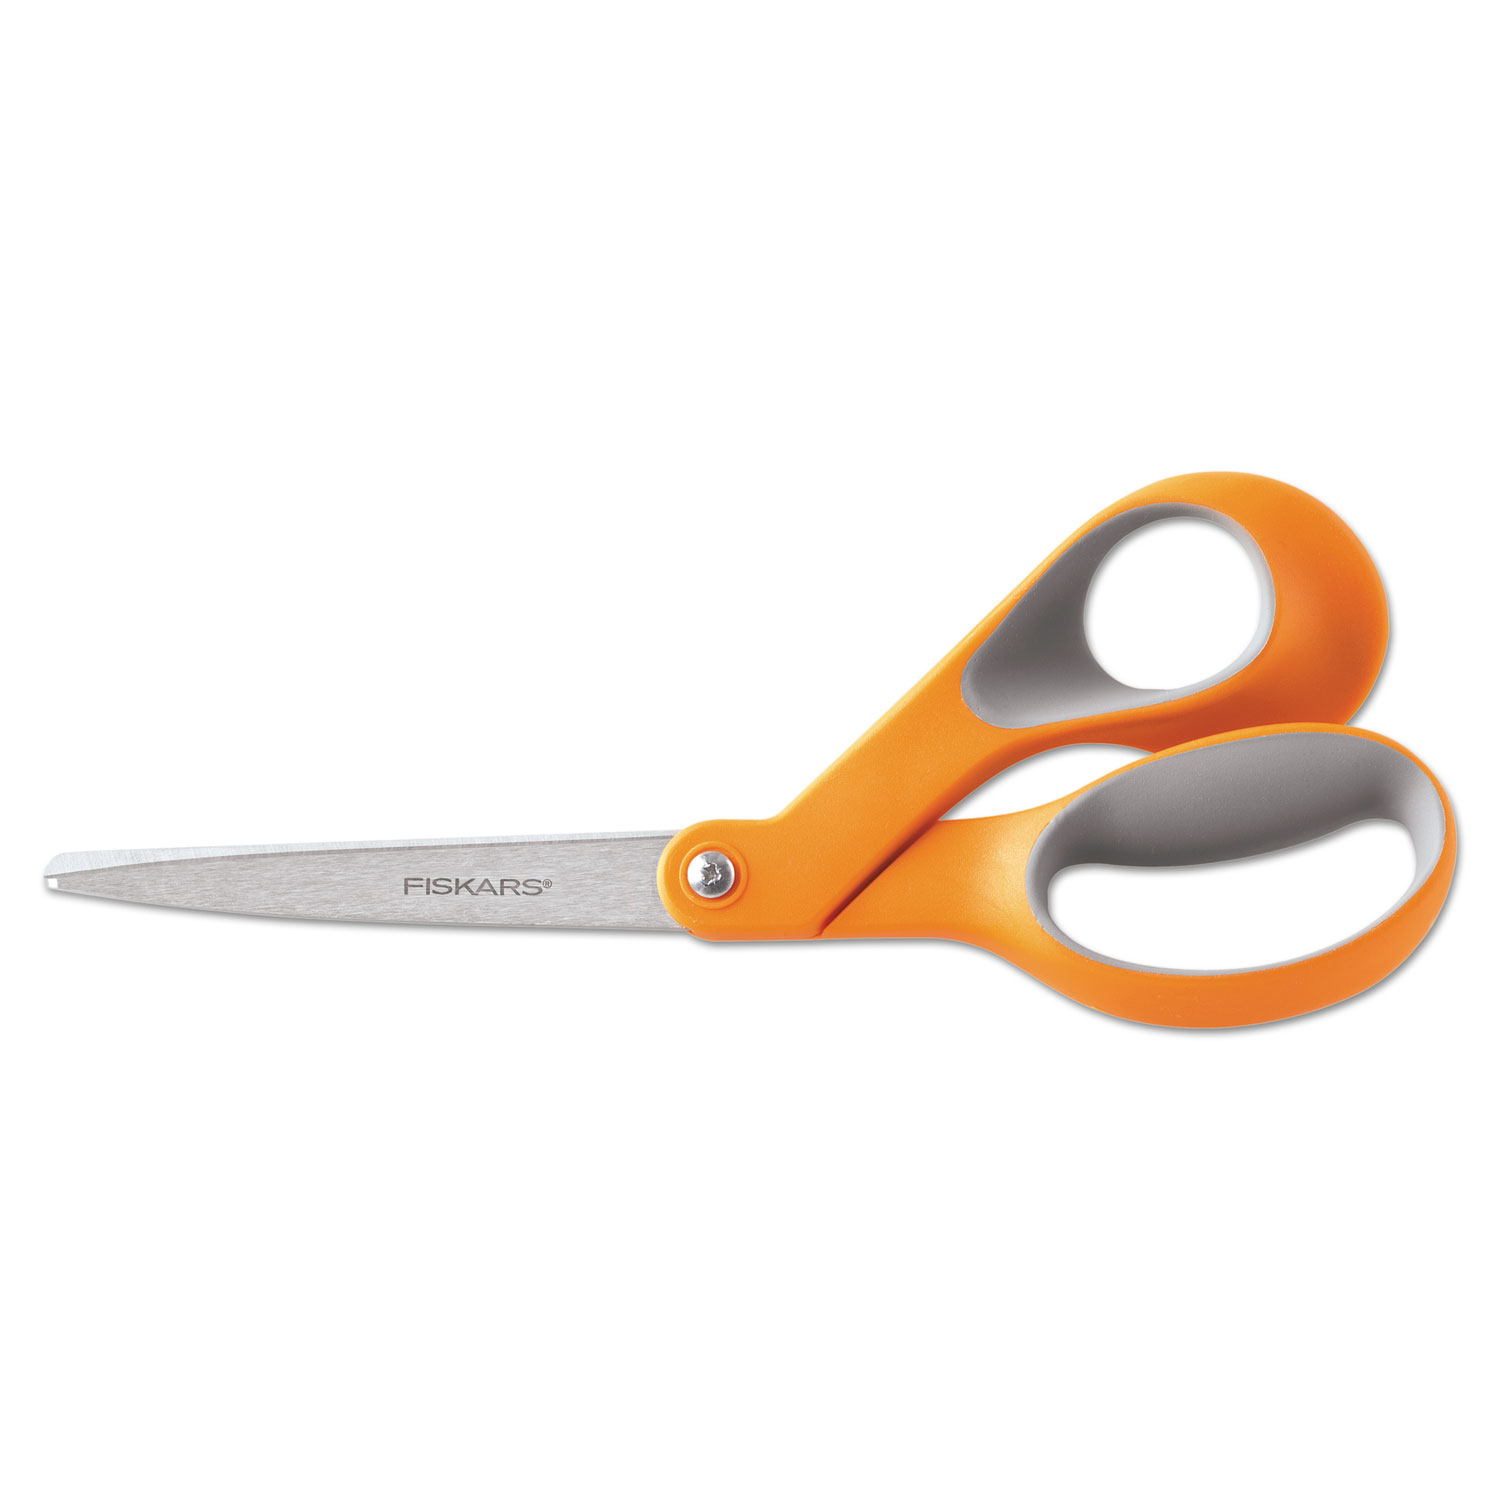  Fiskars 01-009881 Home and Office Scissors, 8 Long, 3.5 Cut Length, Orange/Gray Offset Handle (FSK01009881) 